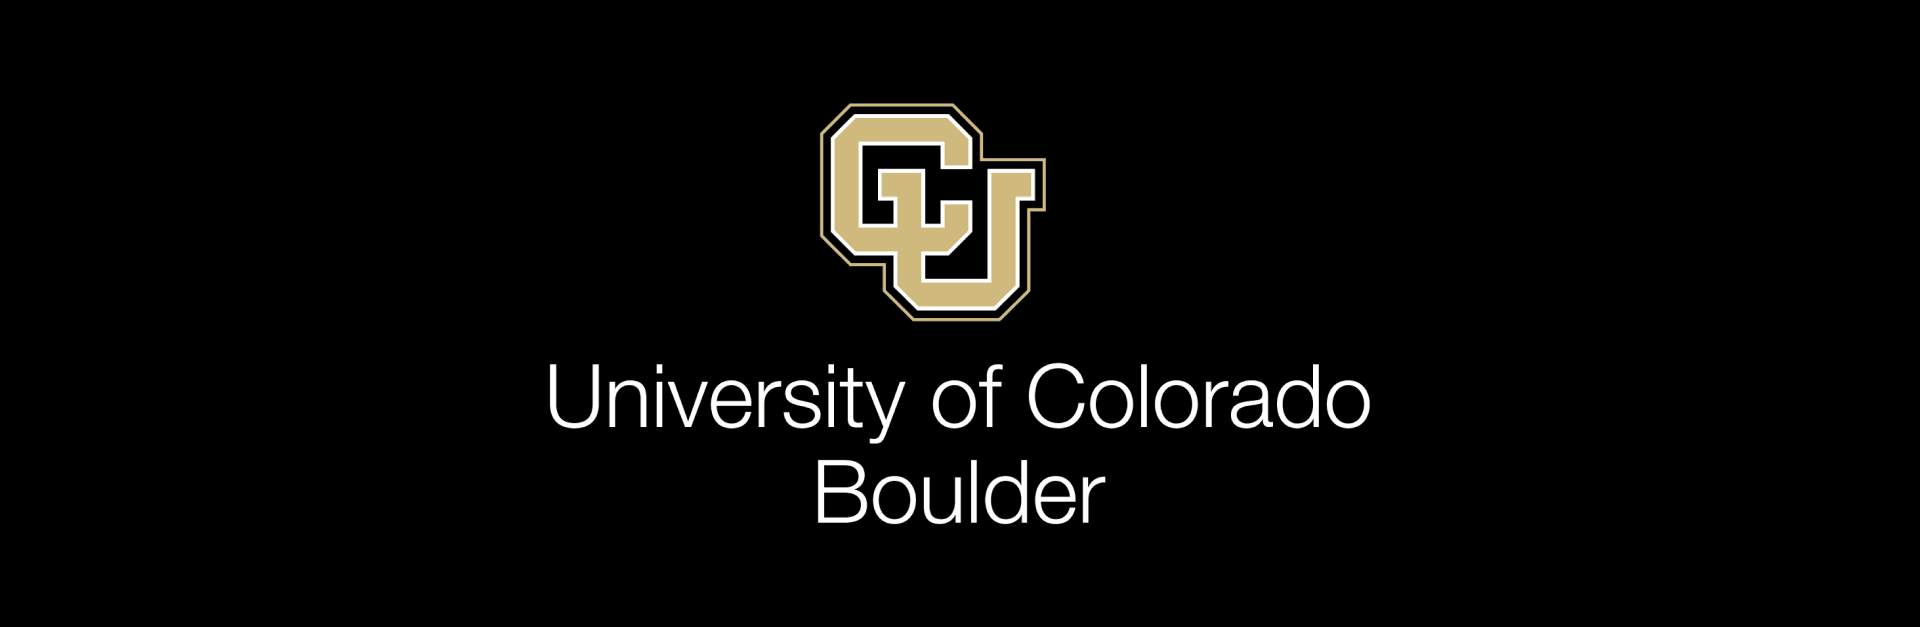 CU Boulder LI Image